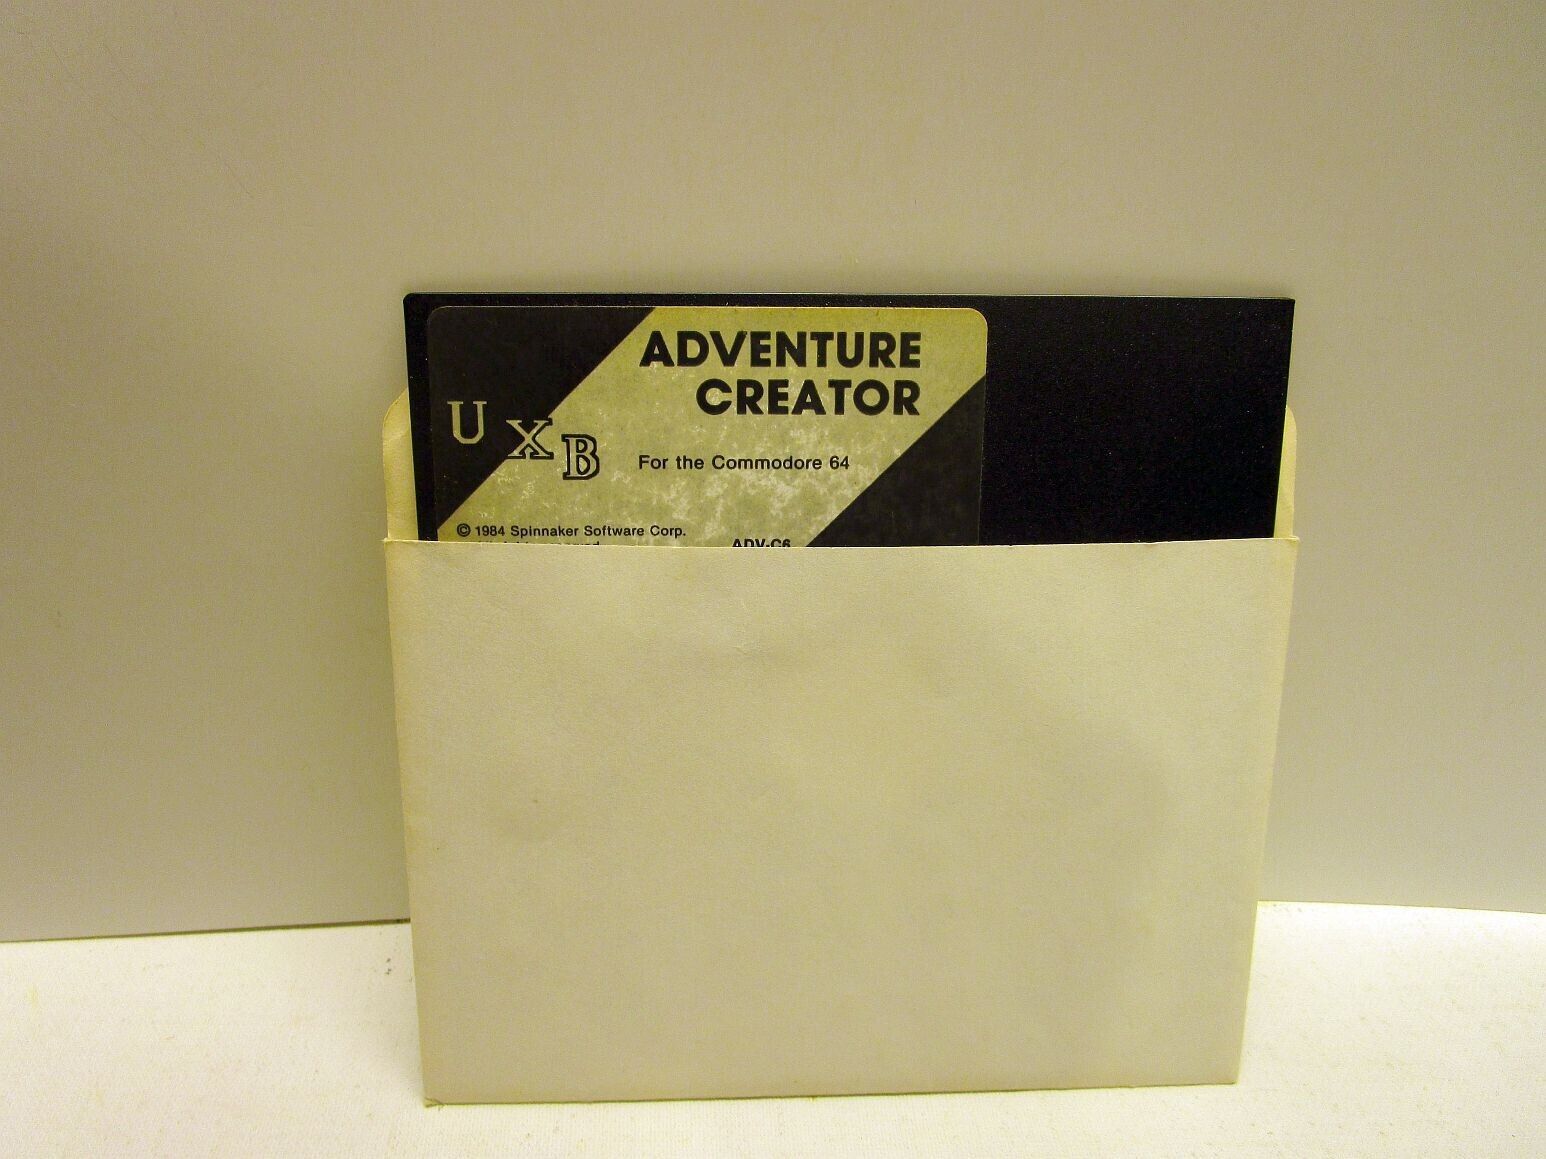 Adventure Creator by UXB for Commodore 64/128